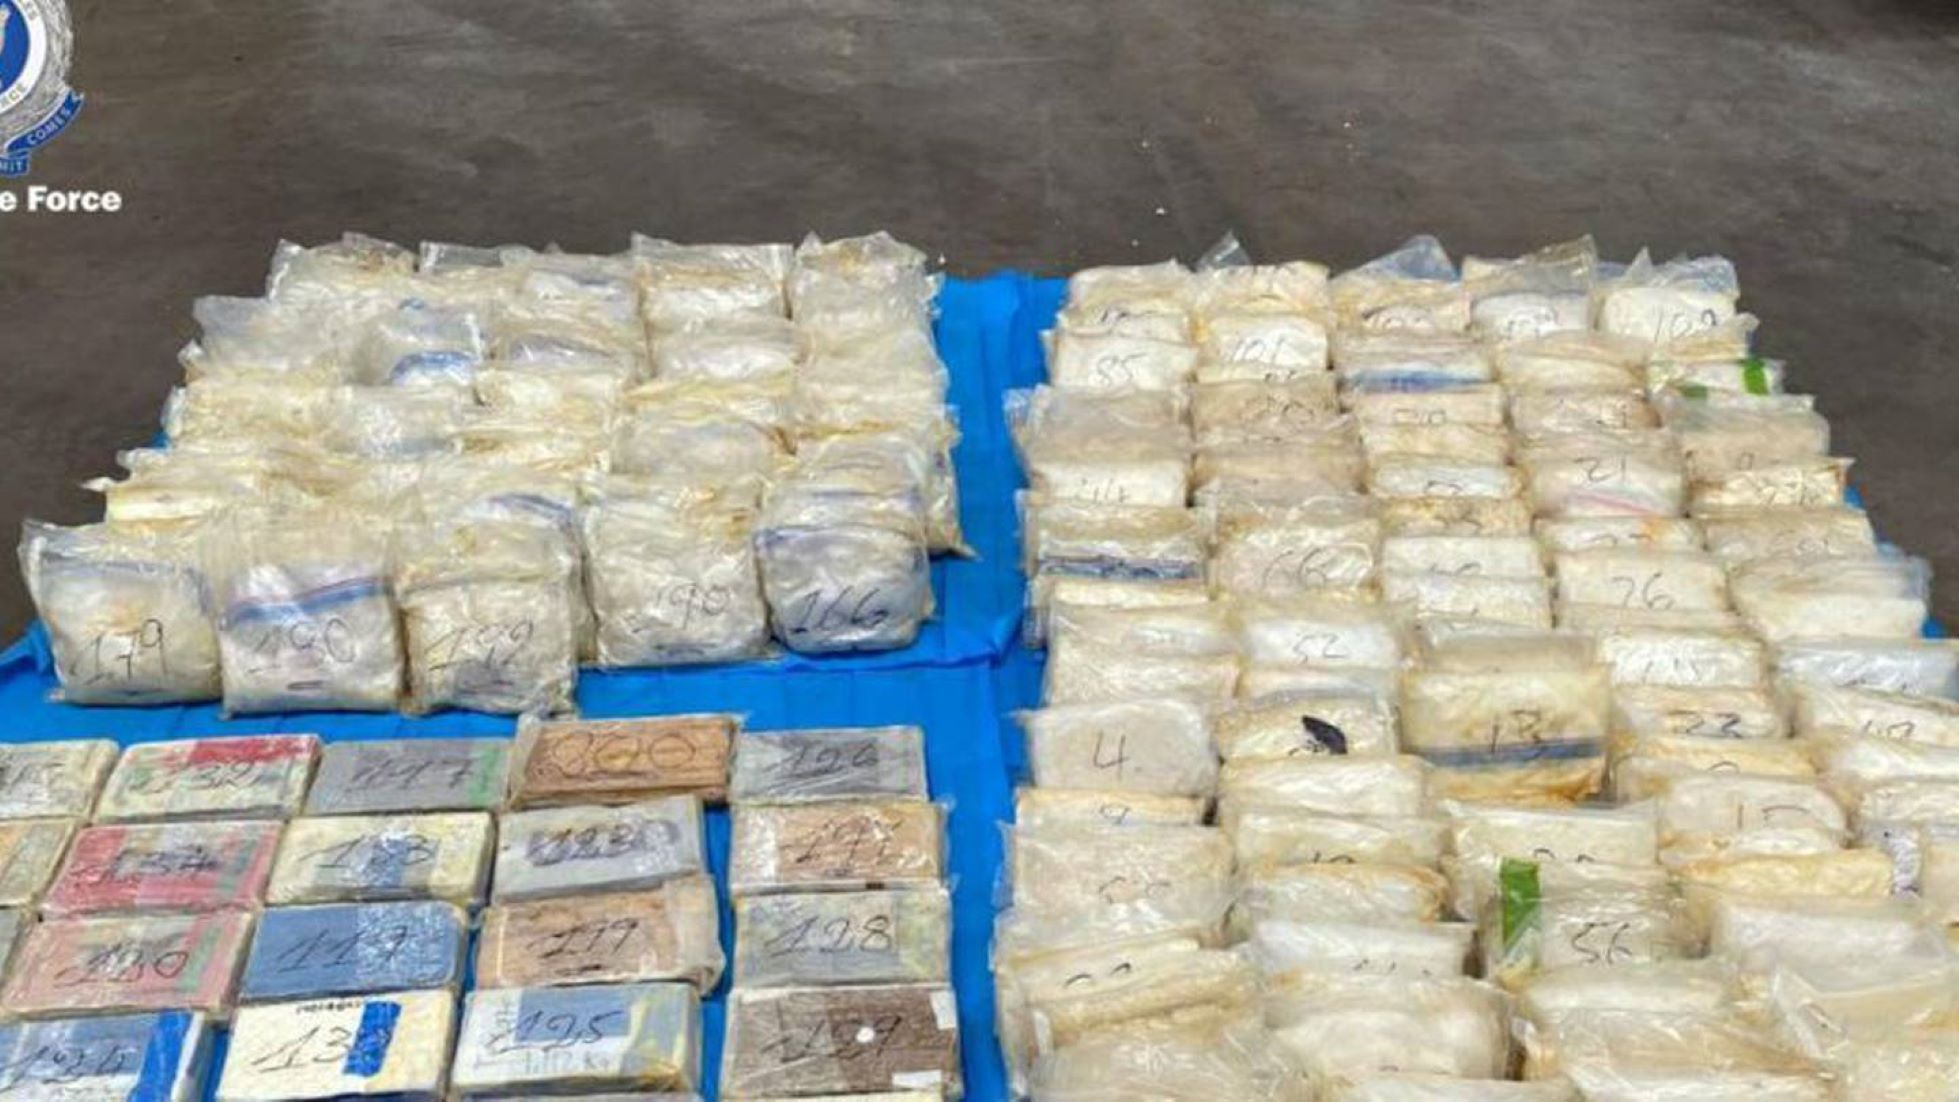 Japan Police Arrested Three Men On Suspicion Of Smuggling 113 Kg Of Illegal Drugs